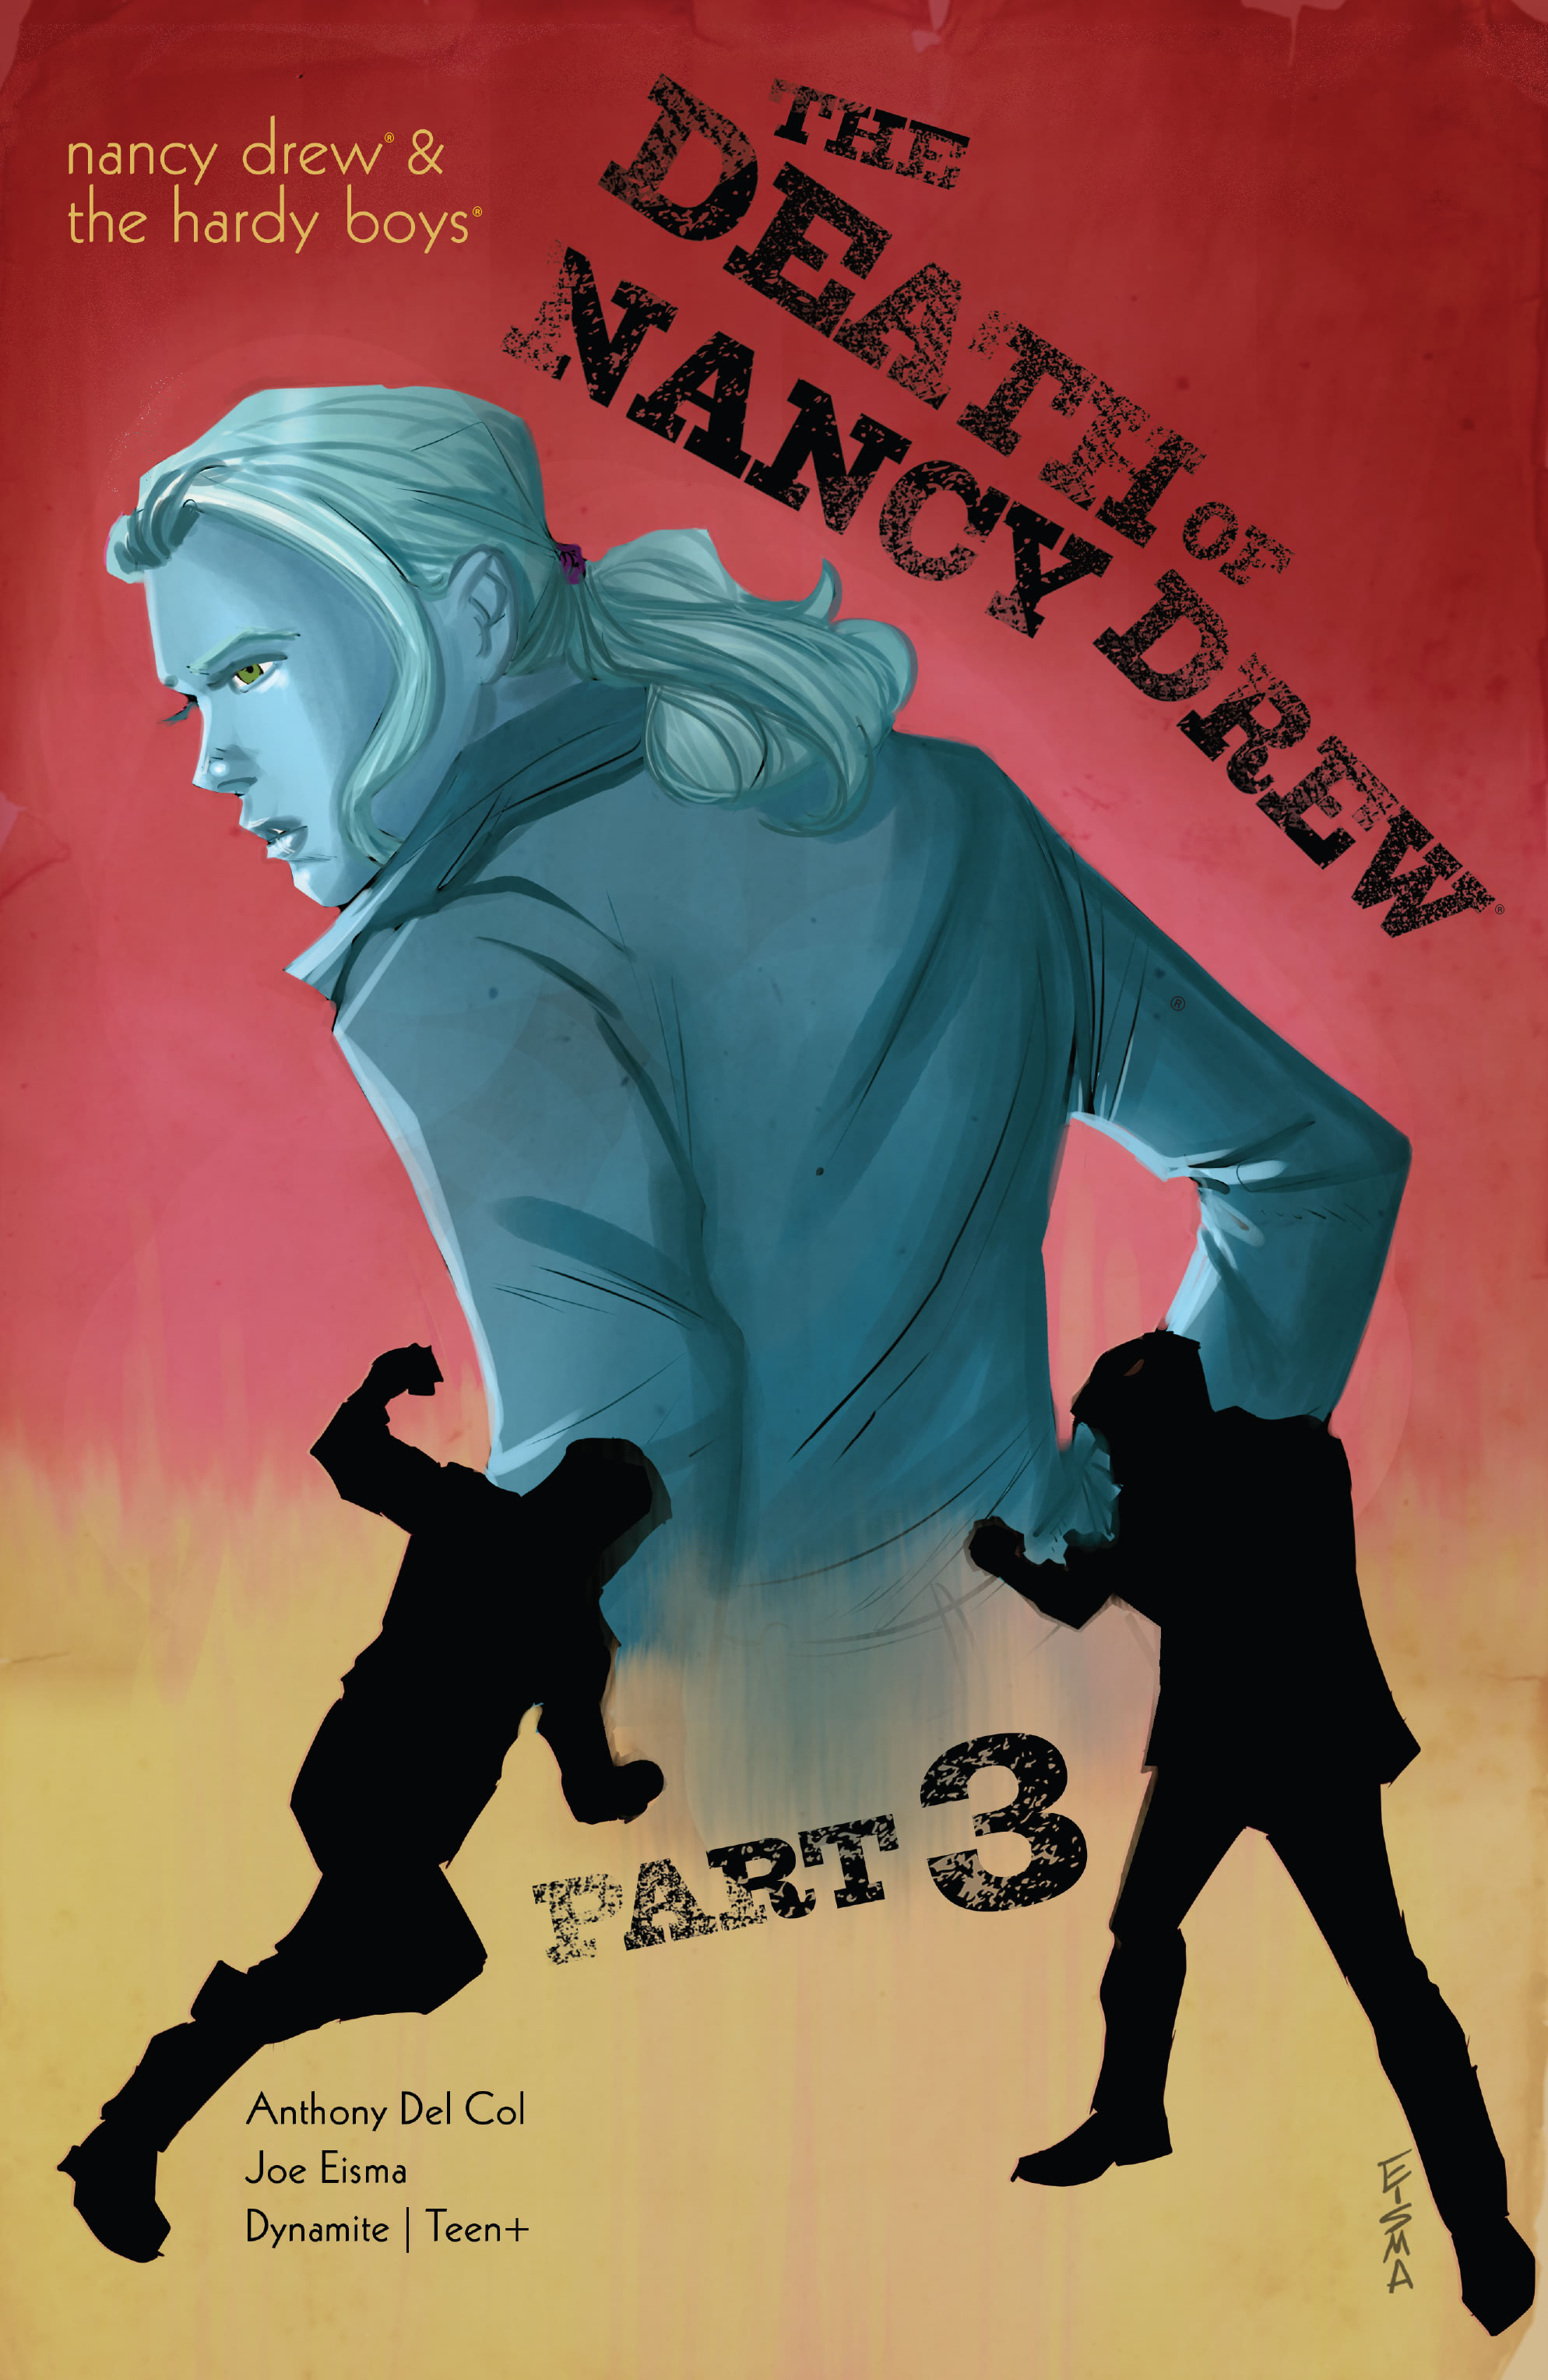 Nancy Drew & The Hardy Boys: The Death of Nancy Drew (2020-): Chapter 3 - Page 1